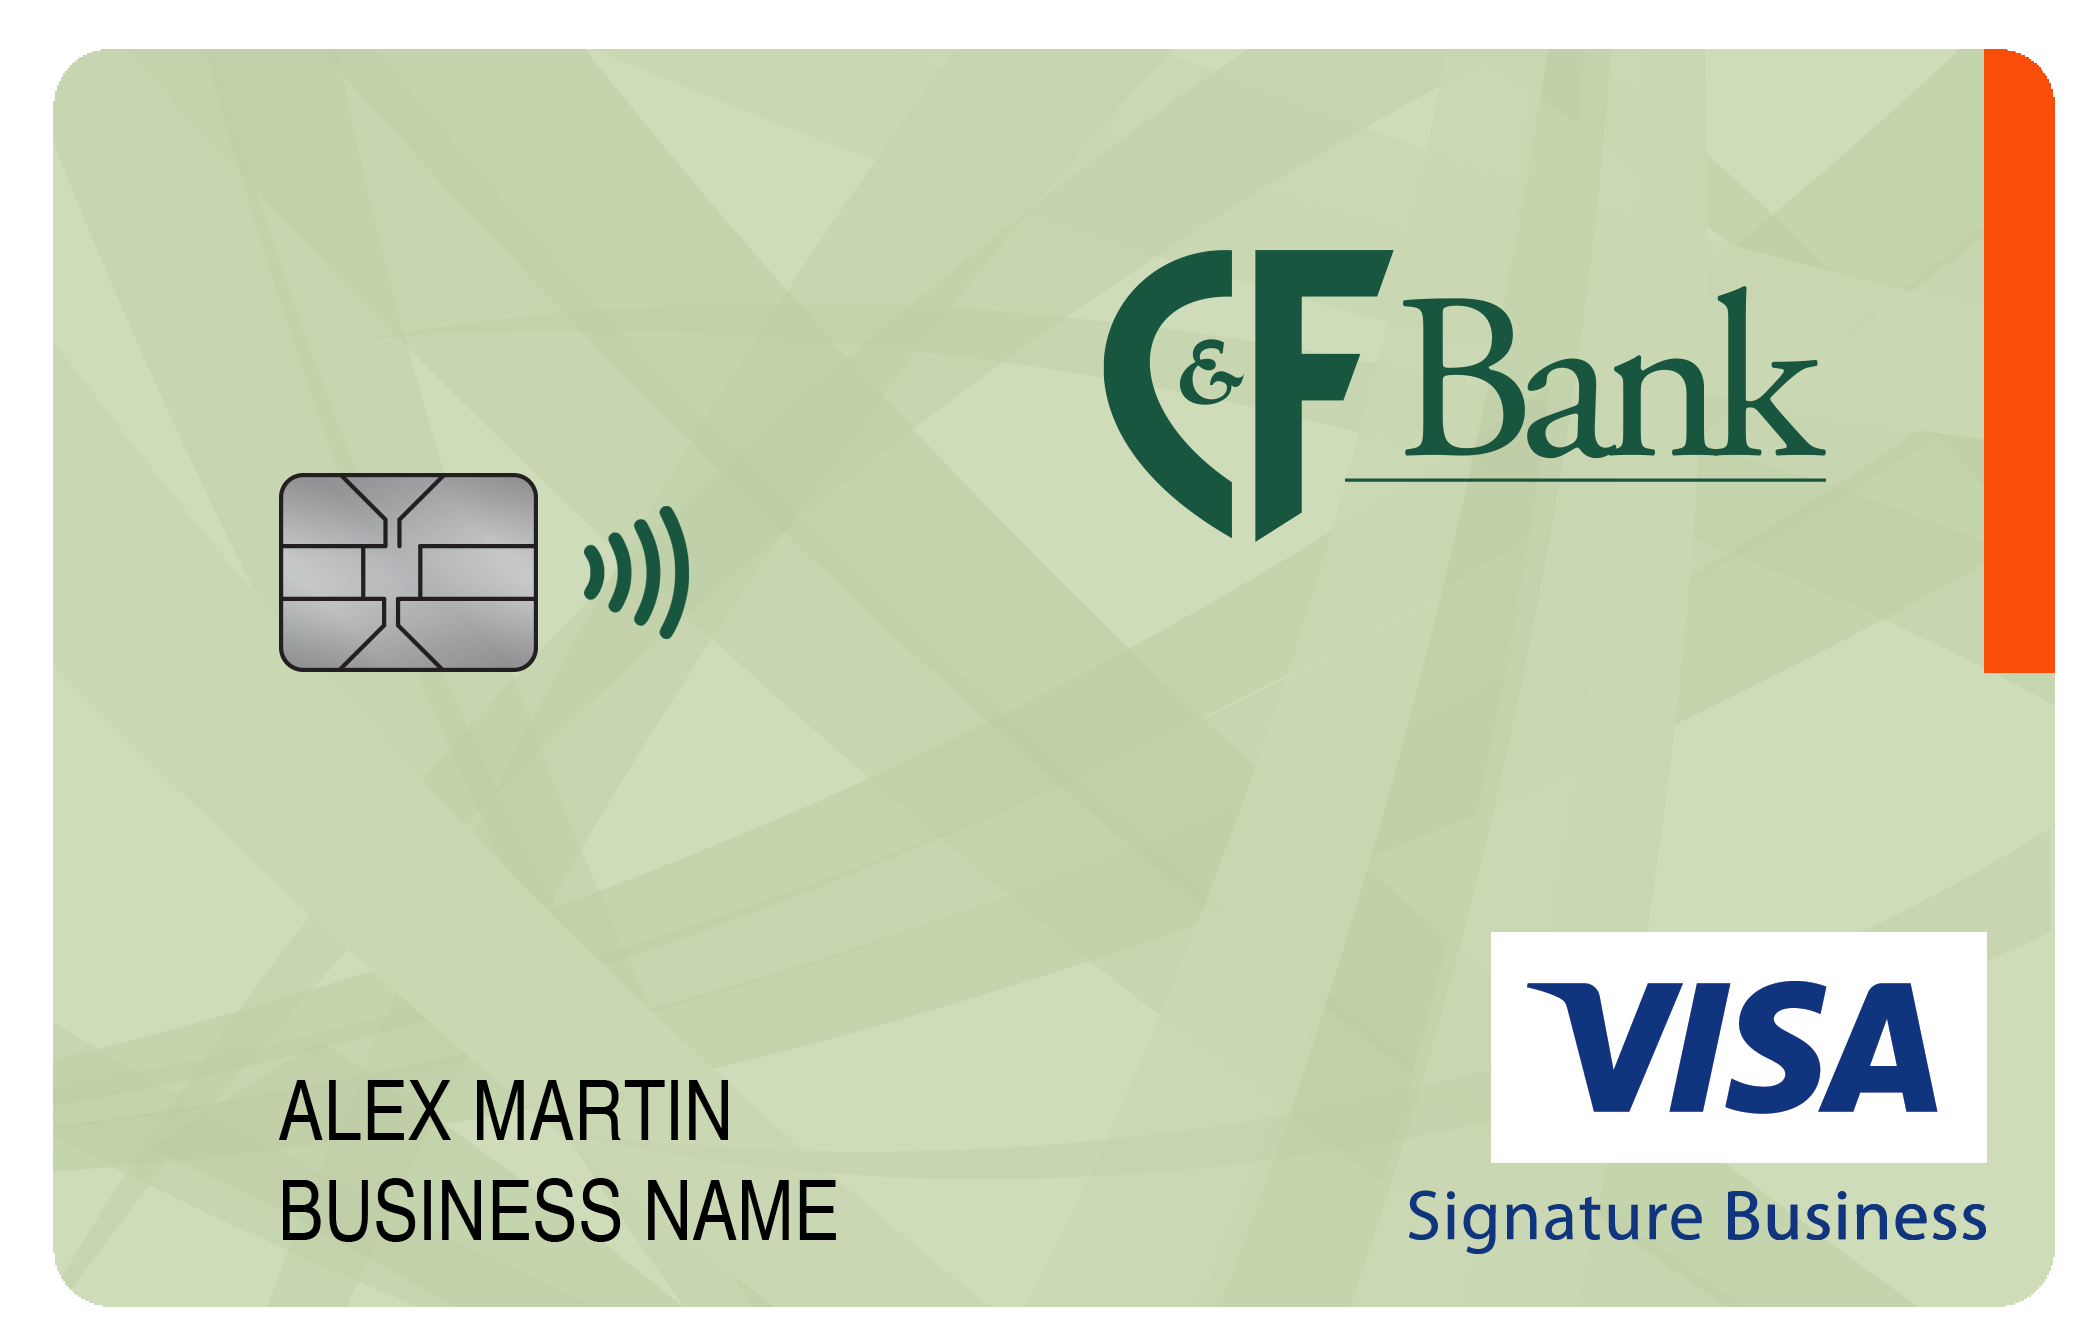 C&F Bank Smart Business Rewards Card